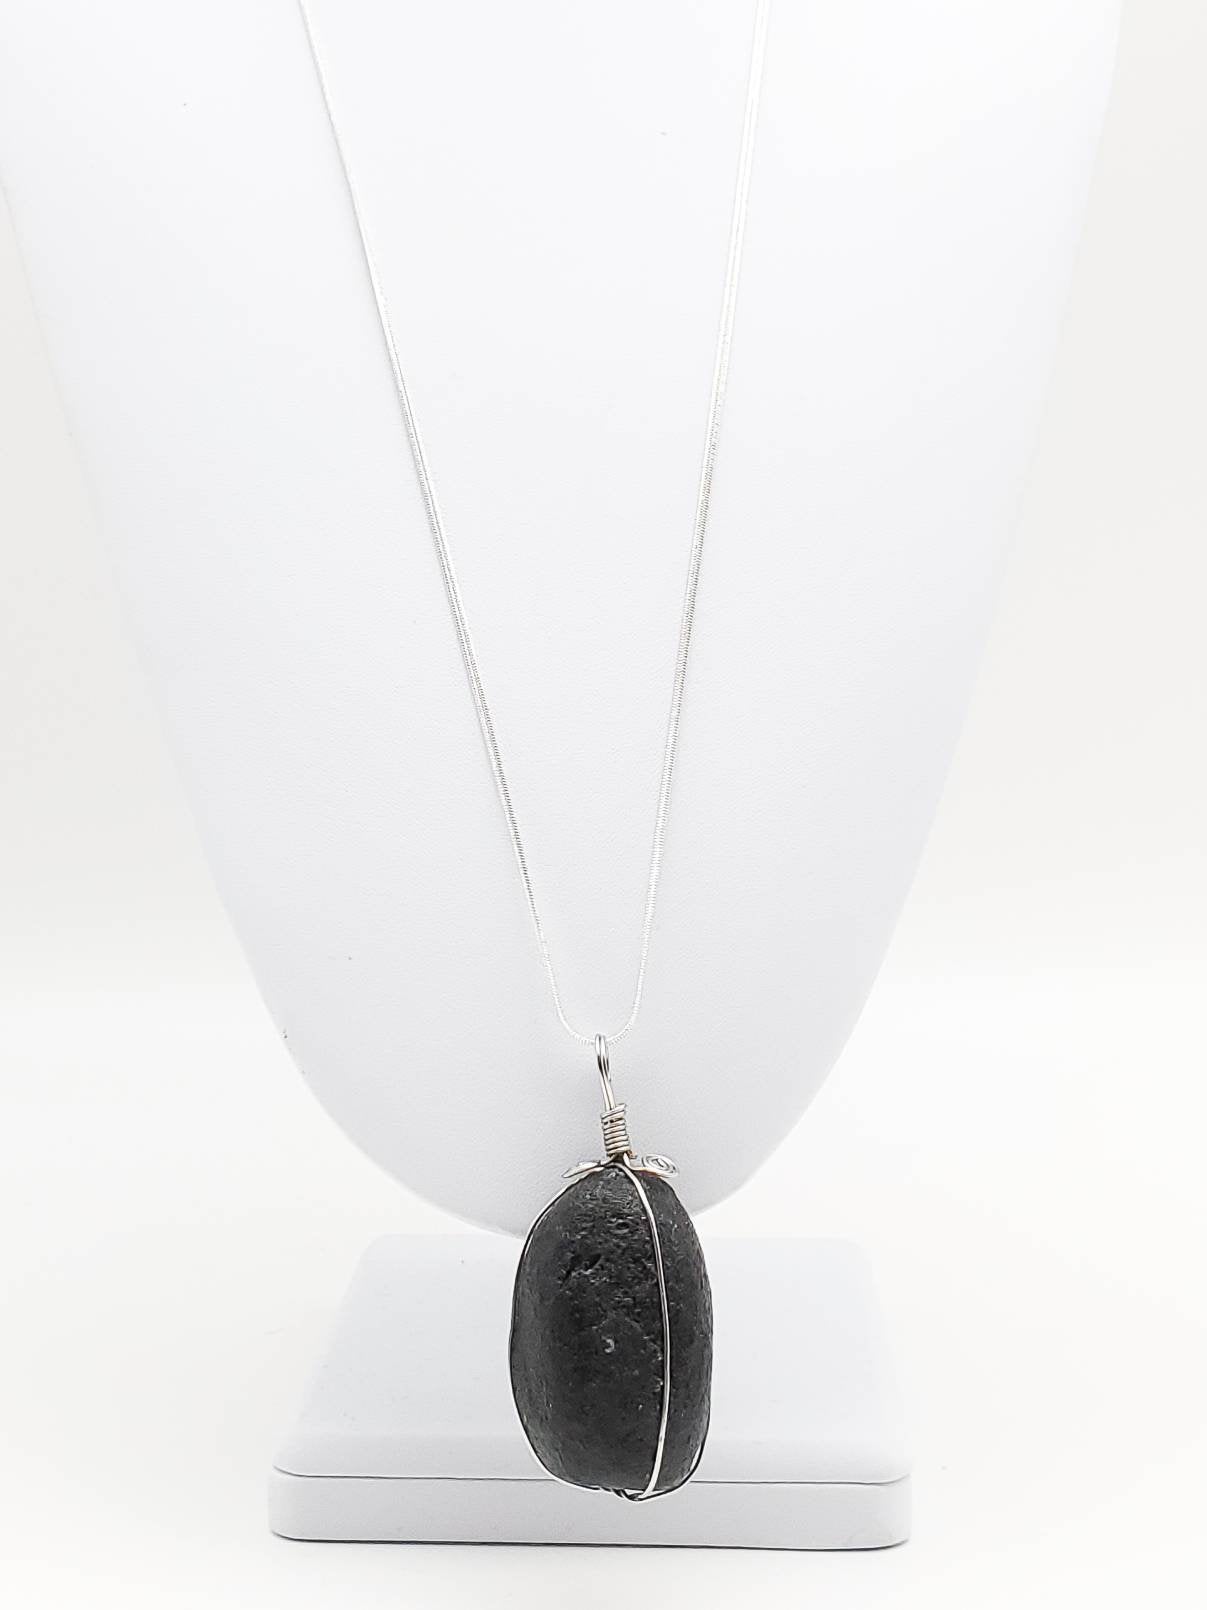 Meteorite/Tektite Pendant Necklace - The Caffeinated Raven